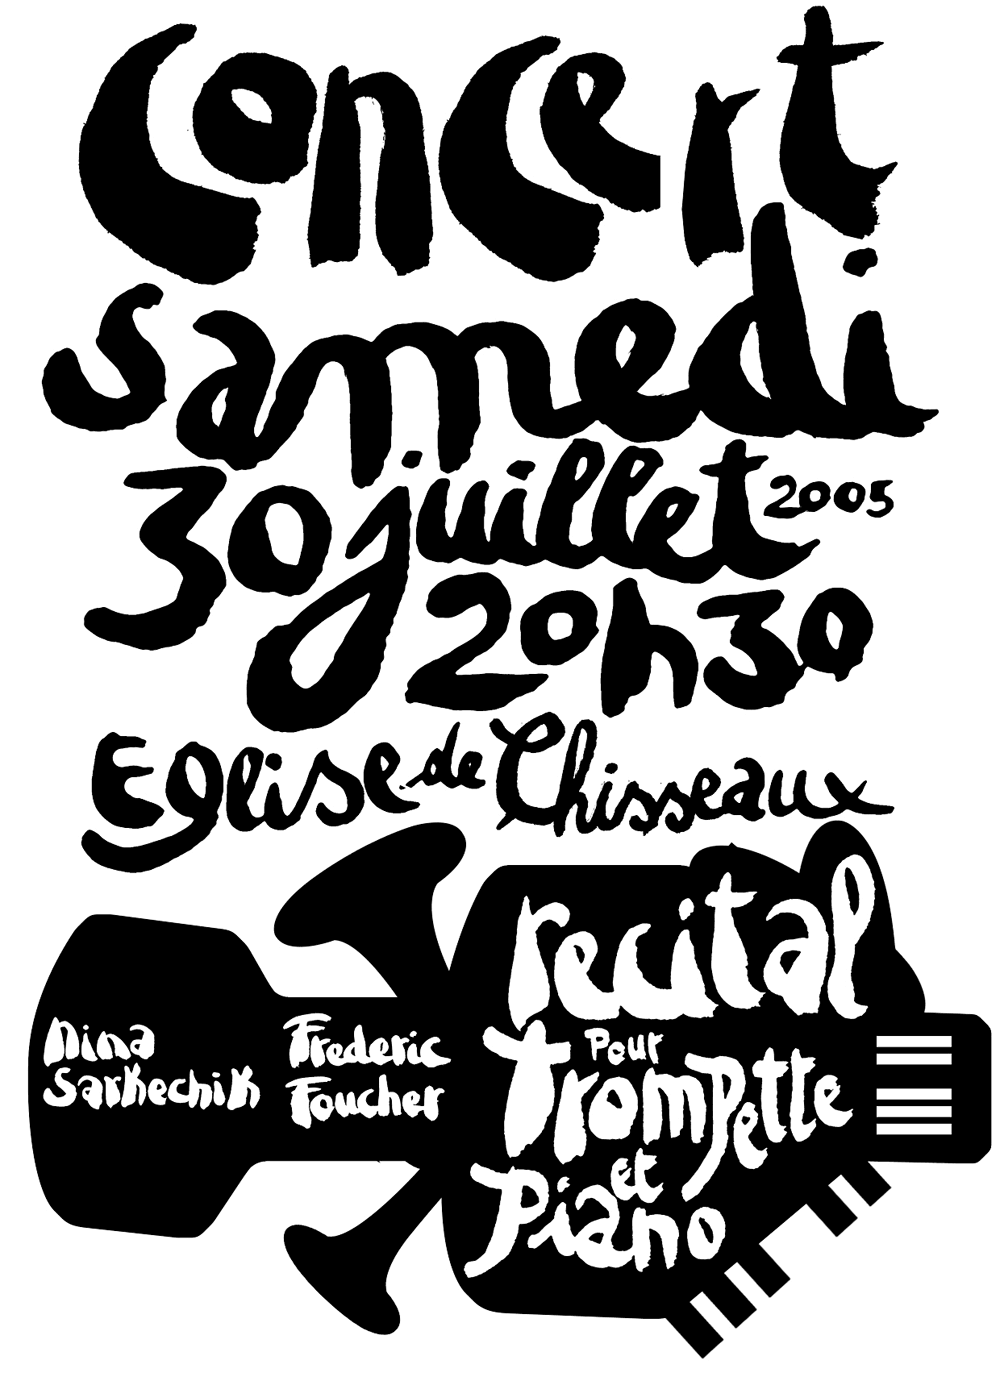 Francois Soulignac - Poster Recital Piano Trumpet - Nima Sarkechik and Frédéric Foucher